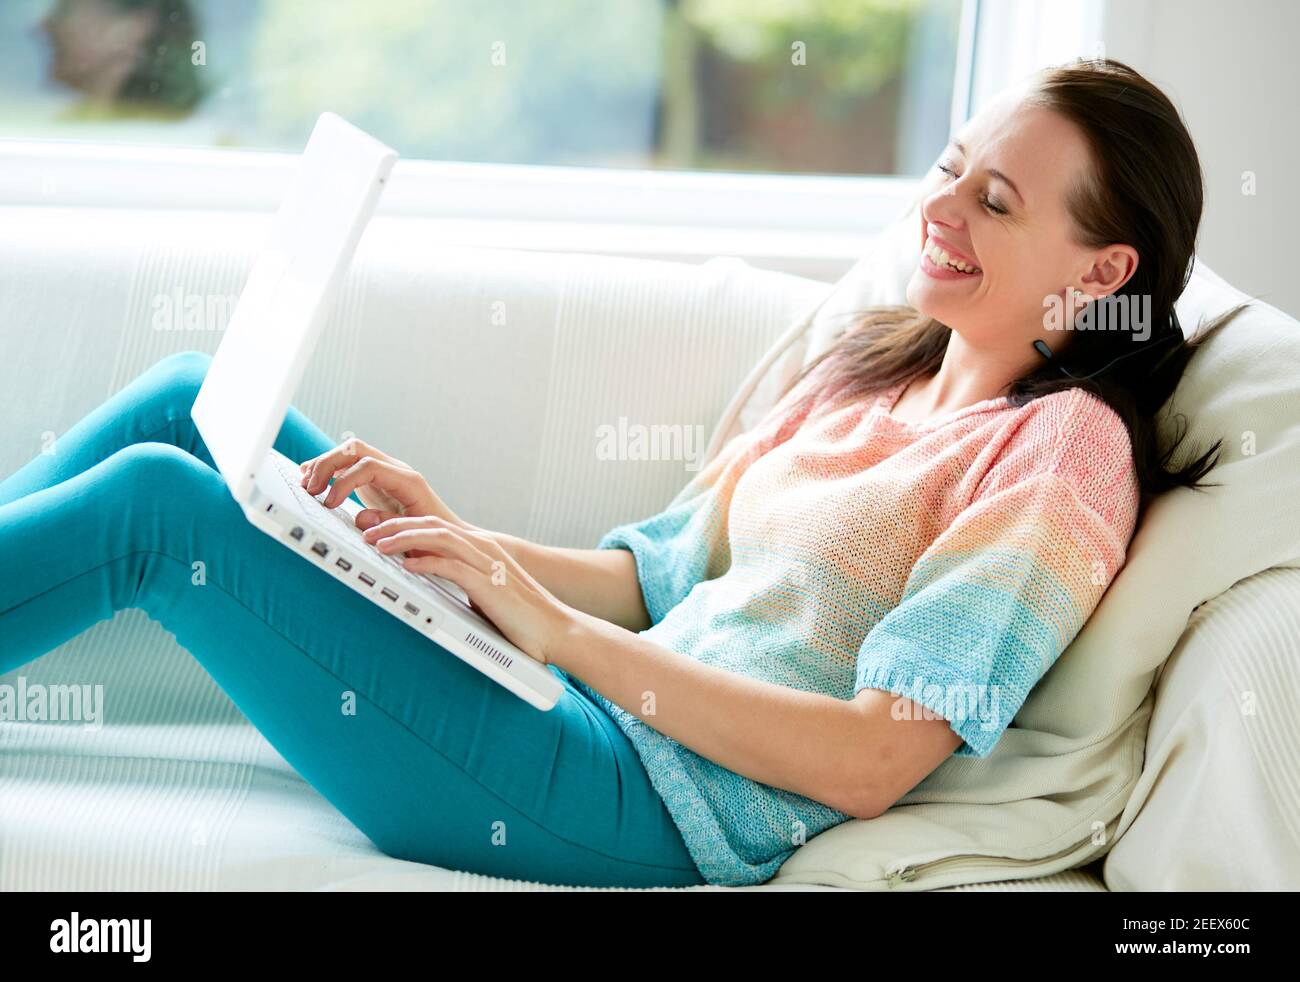 Woman smiling using laptop Stock Photo